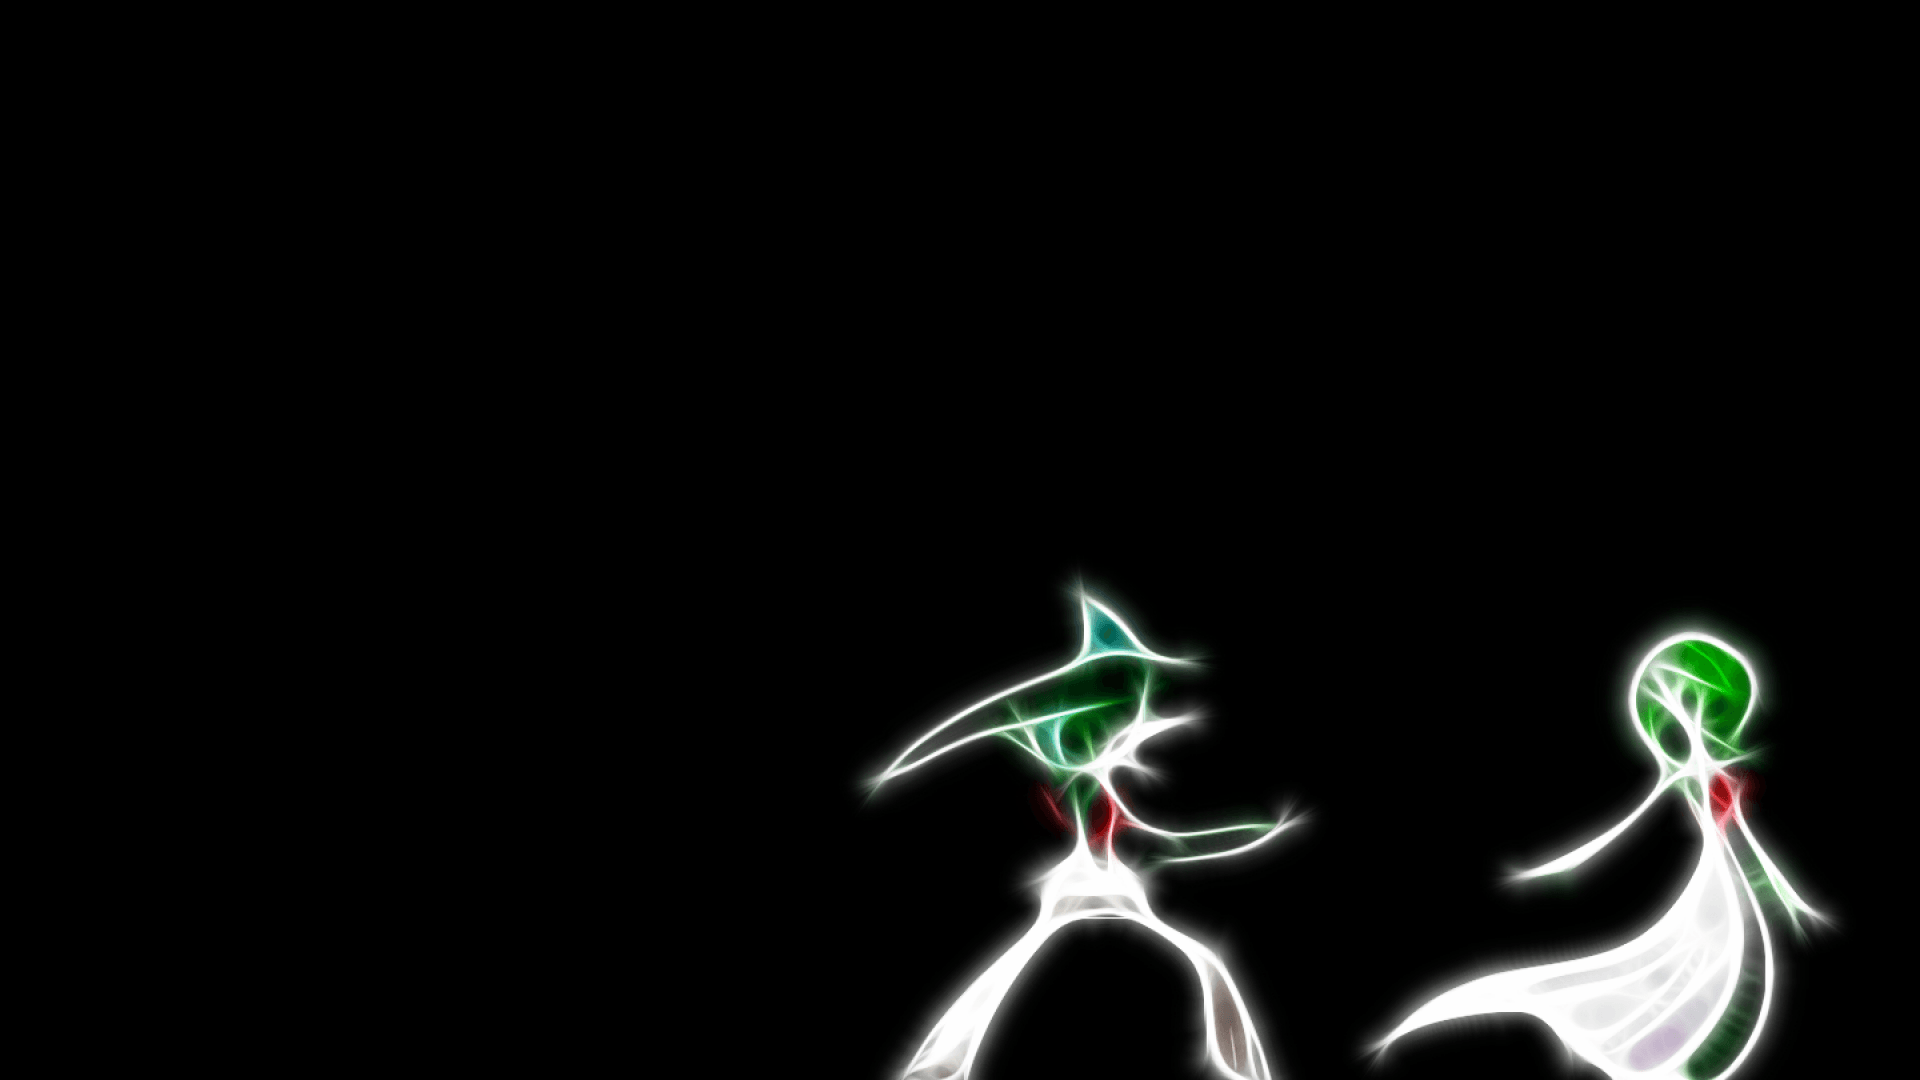 ScreenHeaven: Gallade Gardevoir Pokemon black background desktop